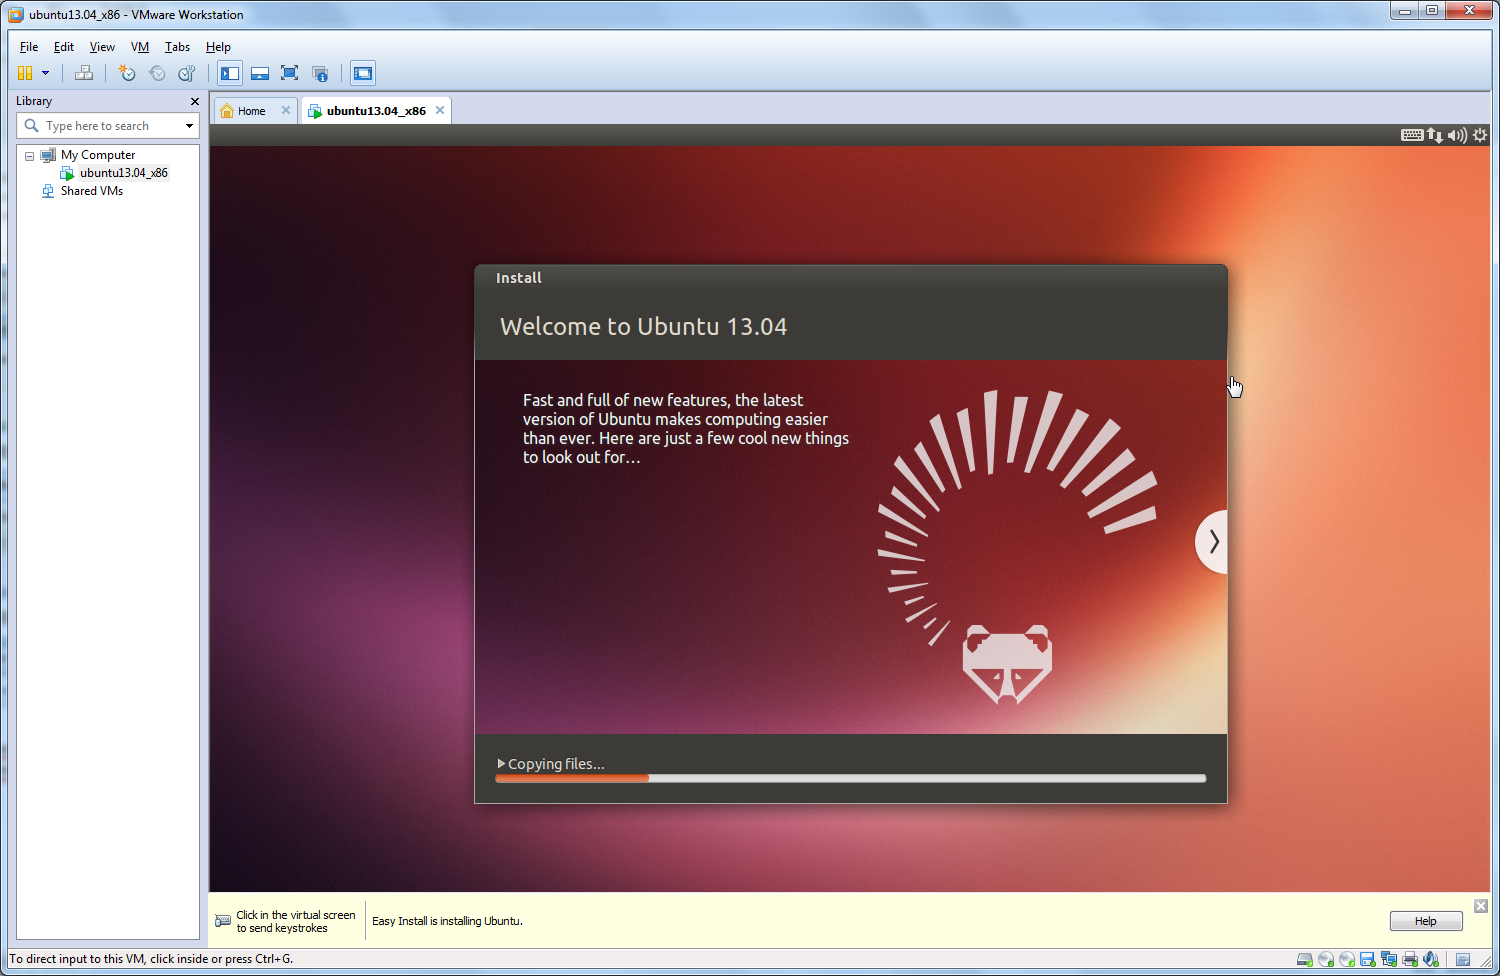 show welcome to ubuntu 13.04 ui